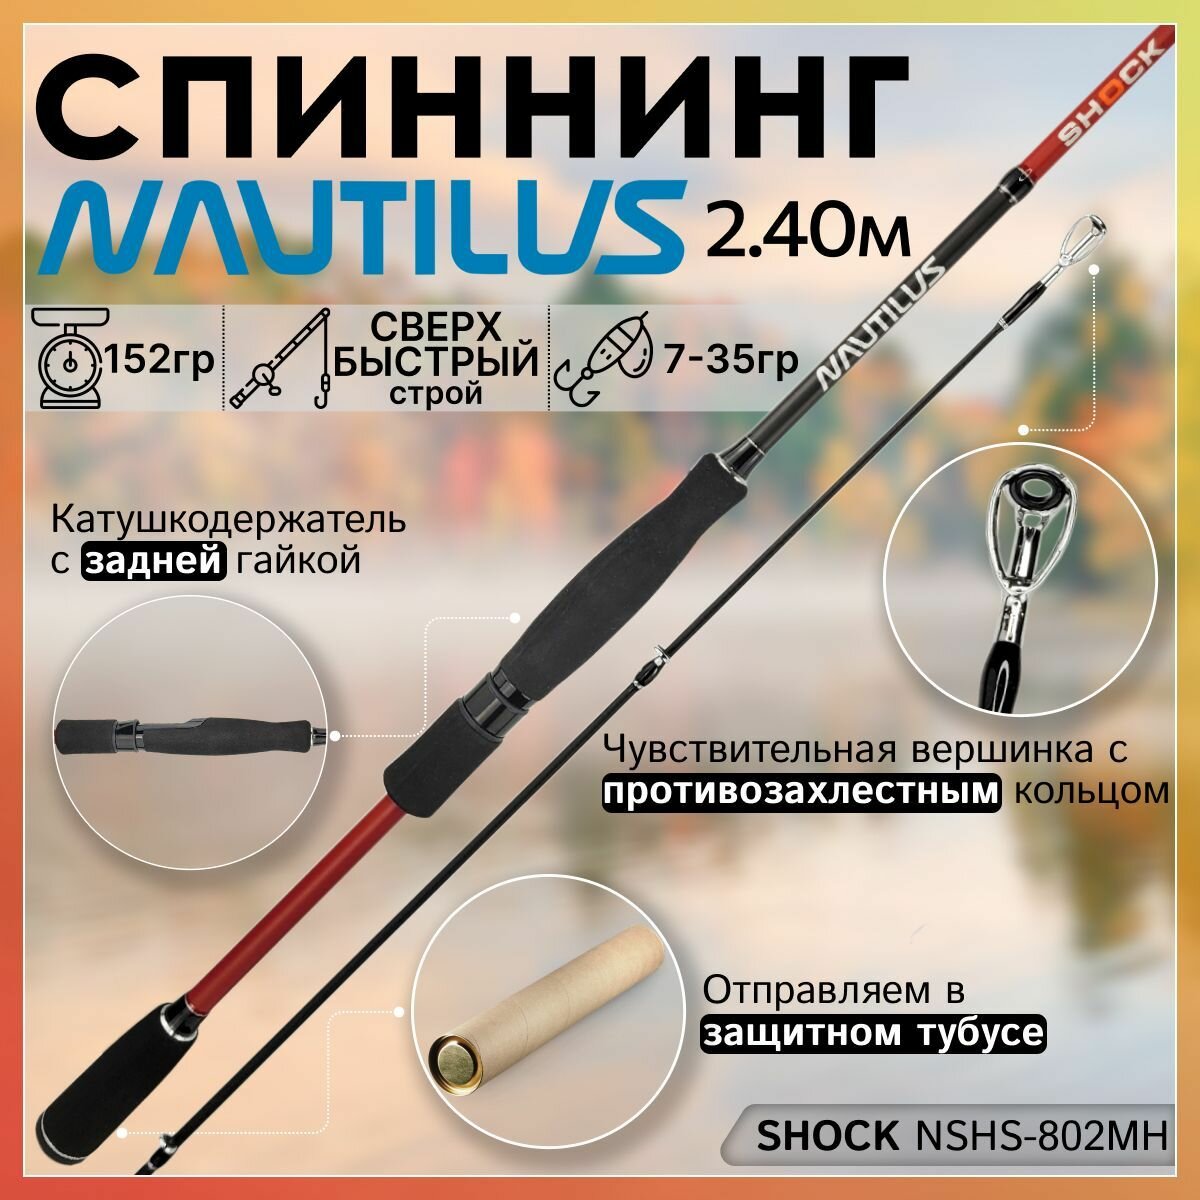 Спиннинг Nautilus SHOCK NSHS-802MH 2.40м 7-35гр